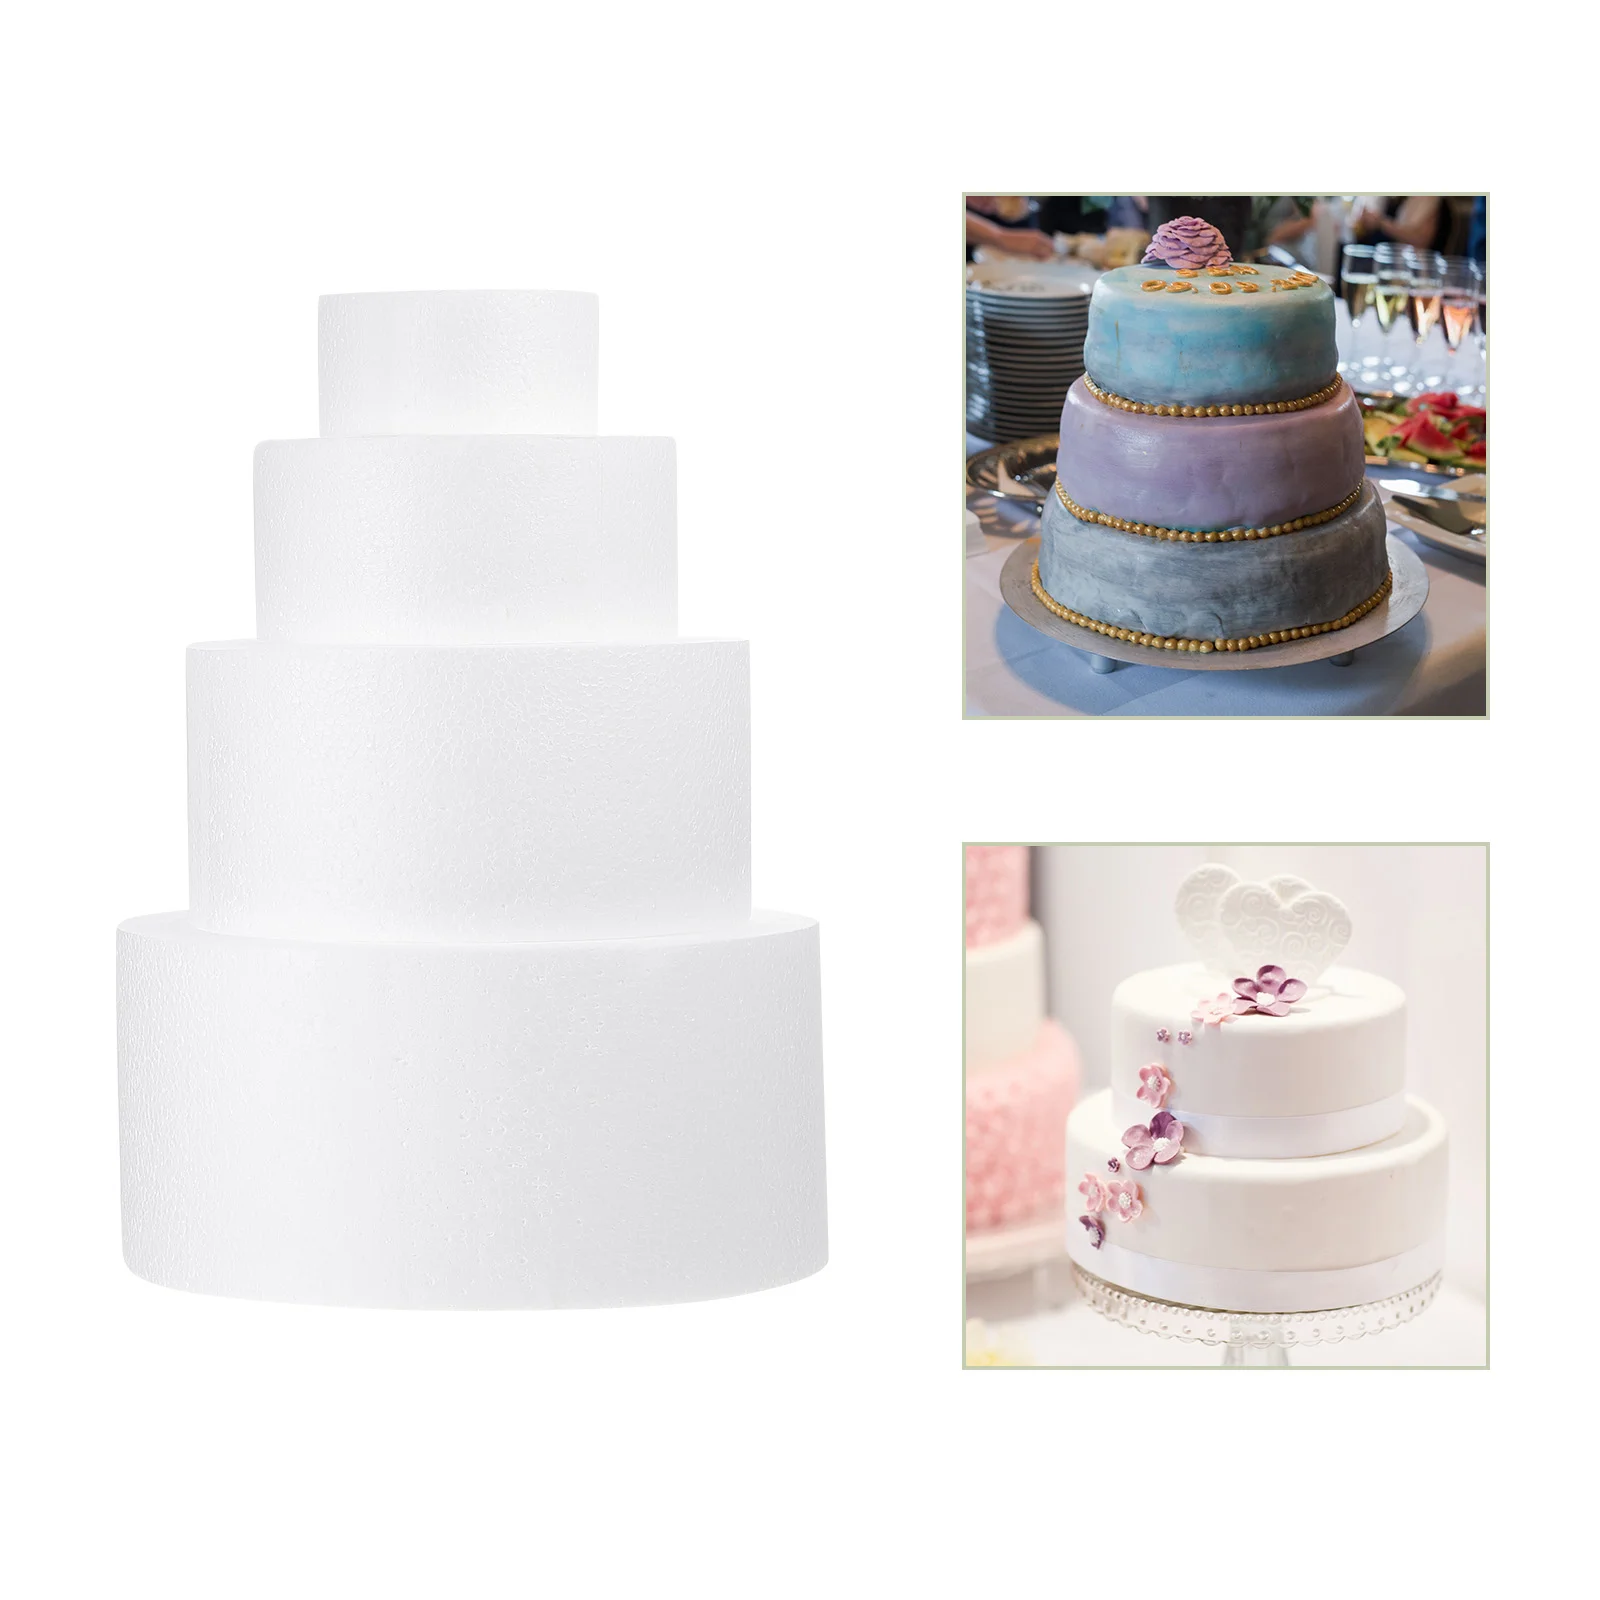 Cake Dummydummies Styrofoam Roundset Rounds Fake Wedding Diy Decorating Polystyrene Cakes Display Mold Inch 10 6 8 Faux Tiers 4